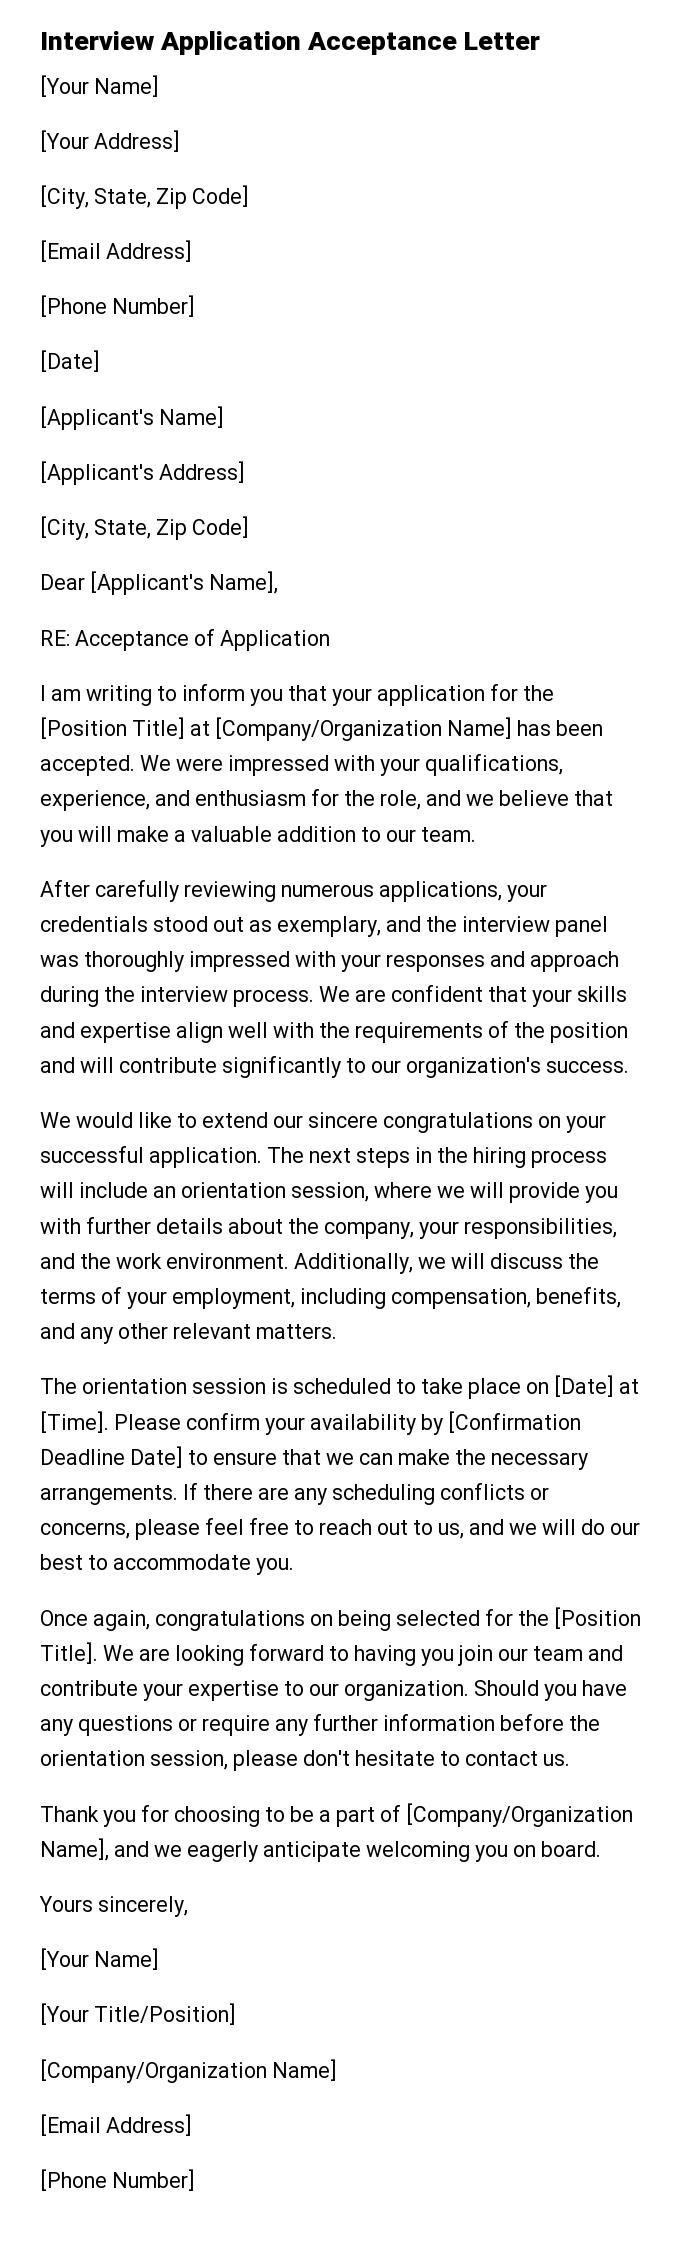 Interview Application Acceptance Letter